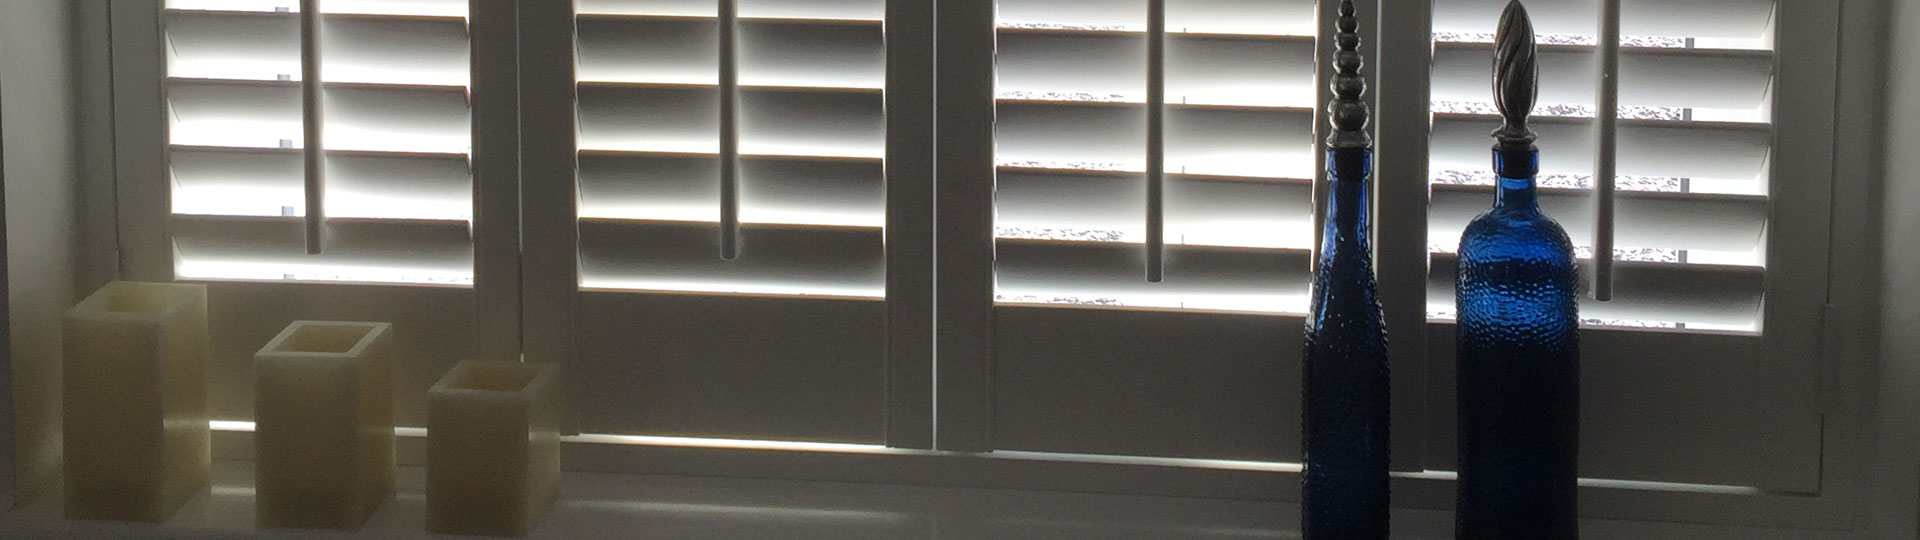 Window shutters perfectly sprayed